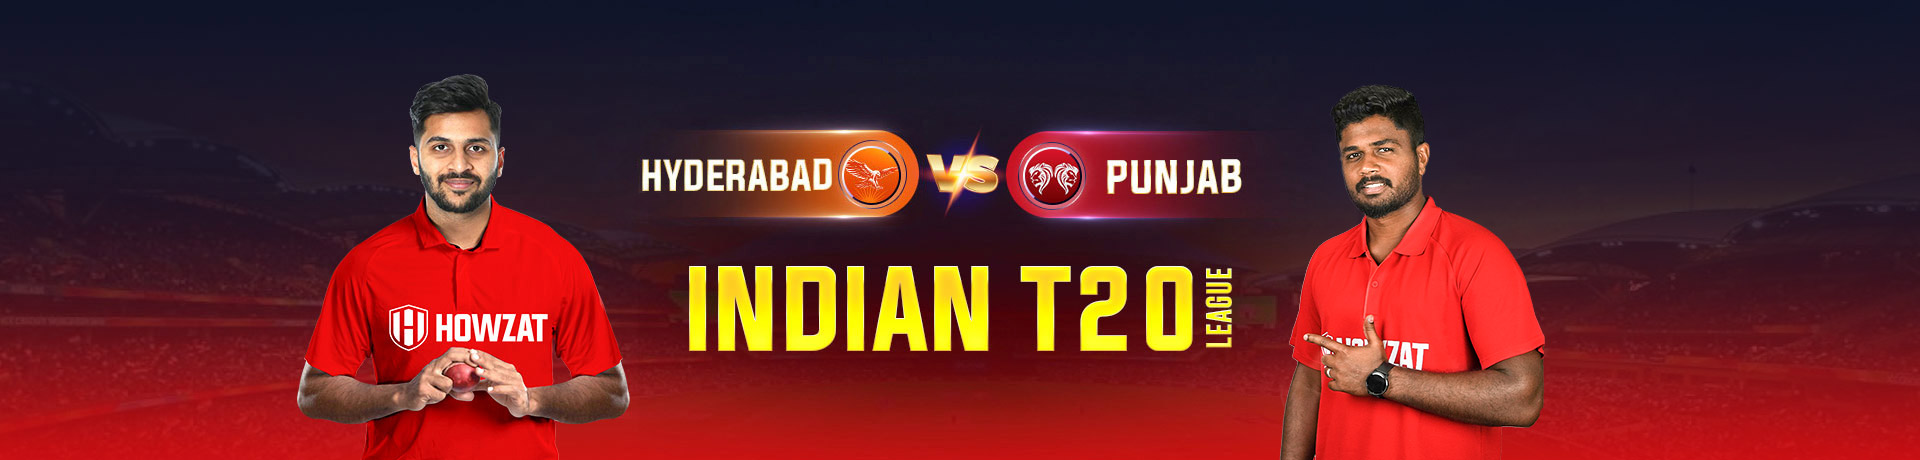 Hyderabad vs Punjab Indian T20 League